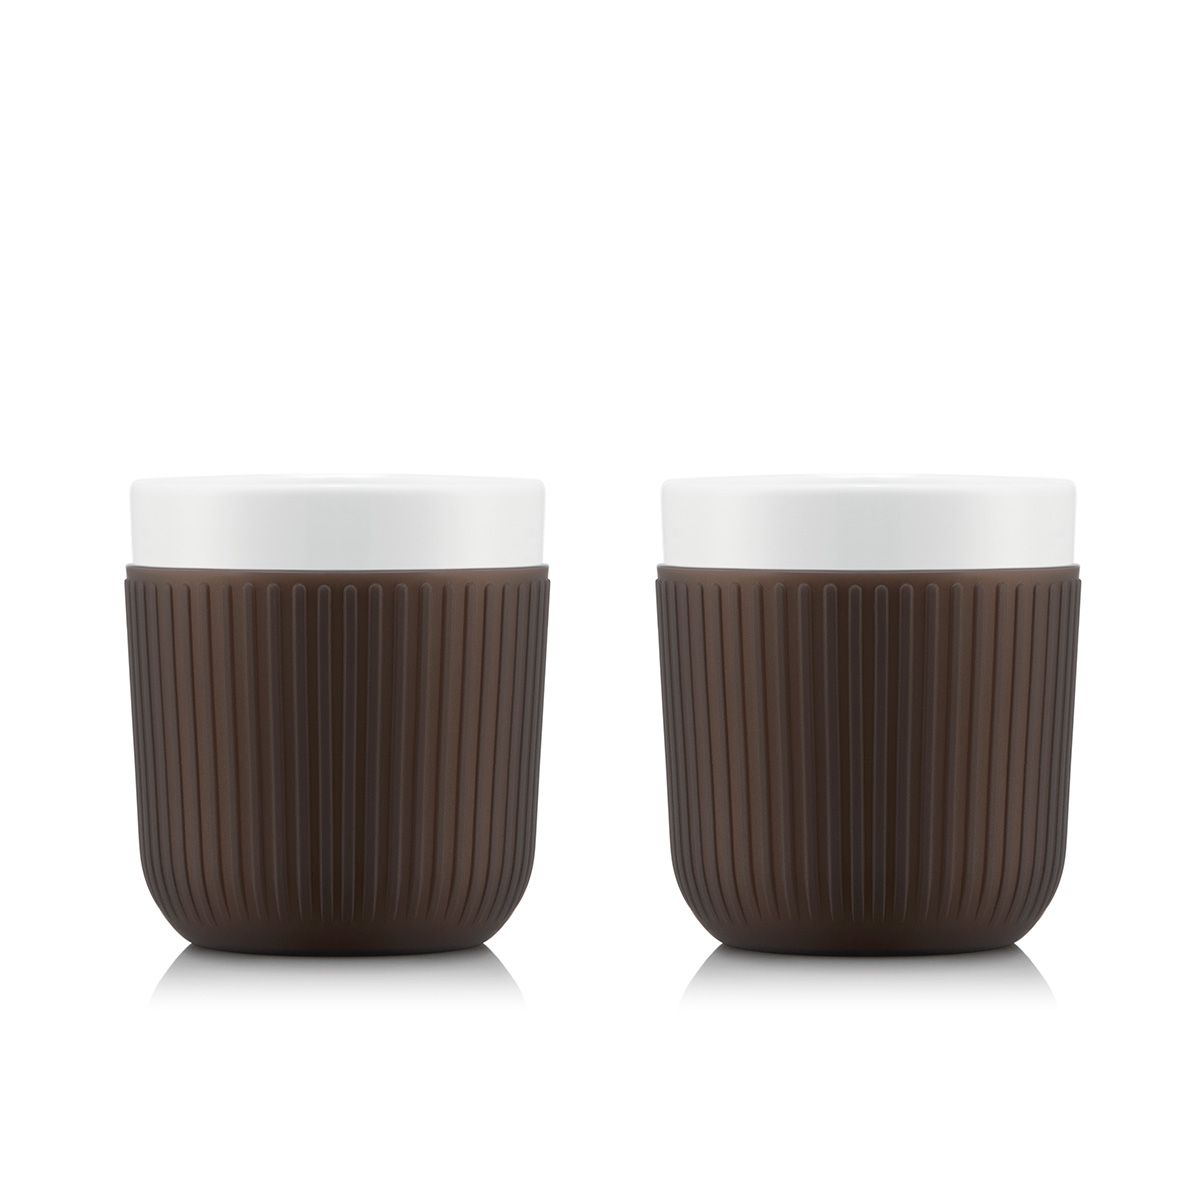 DUOS® Tazas de Cafe (2x 410ml Jumbo) - Vaso doble pared, Taza te, Taza  doble pared